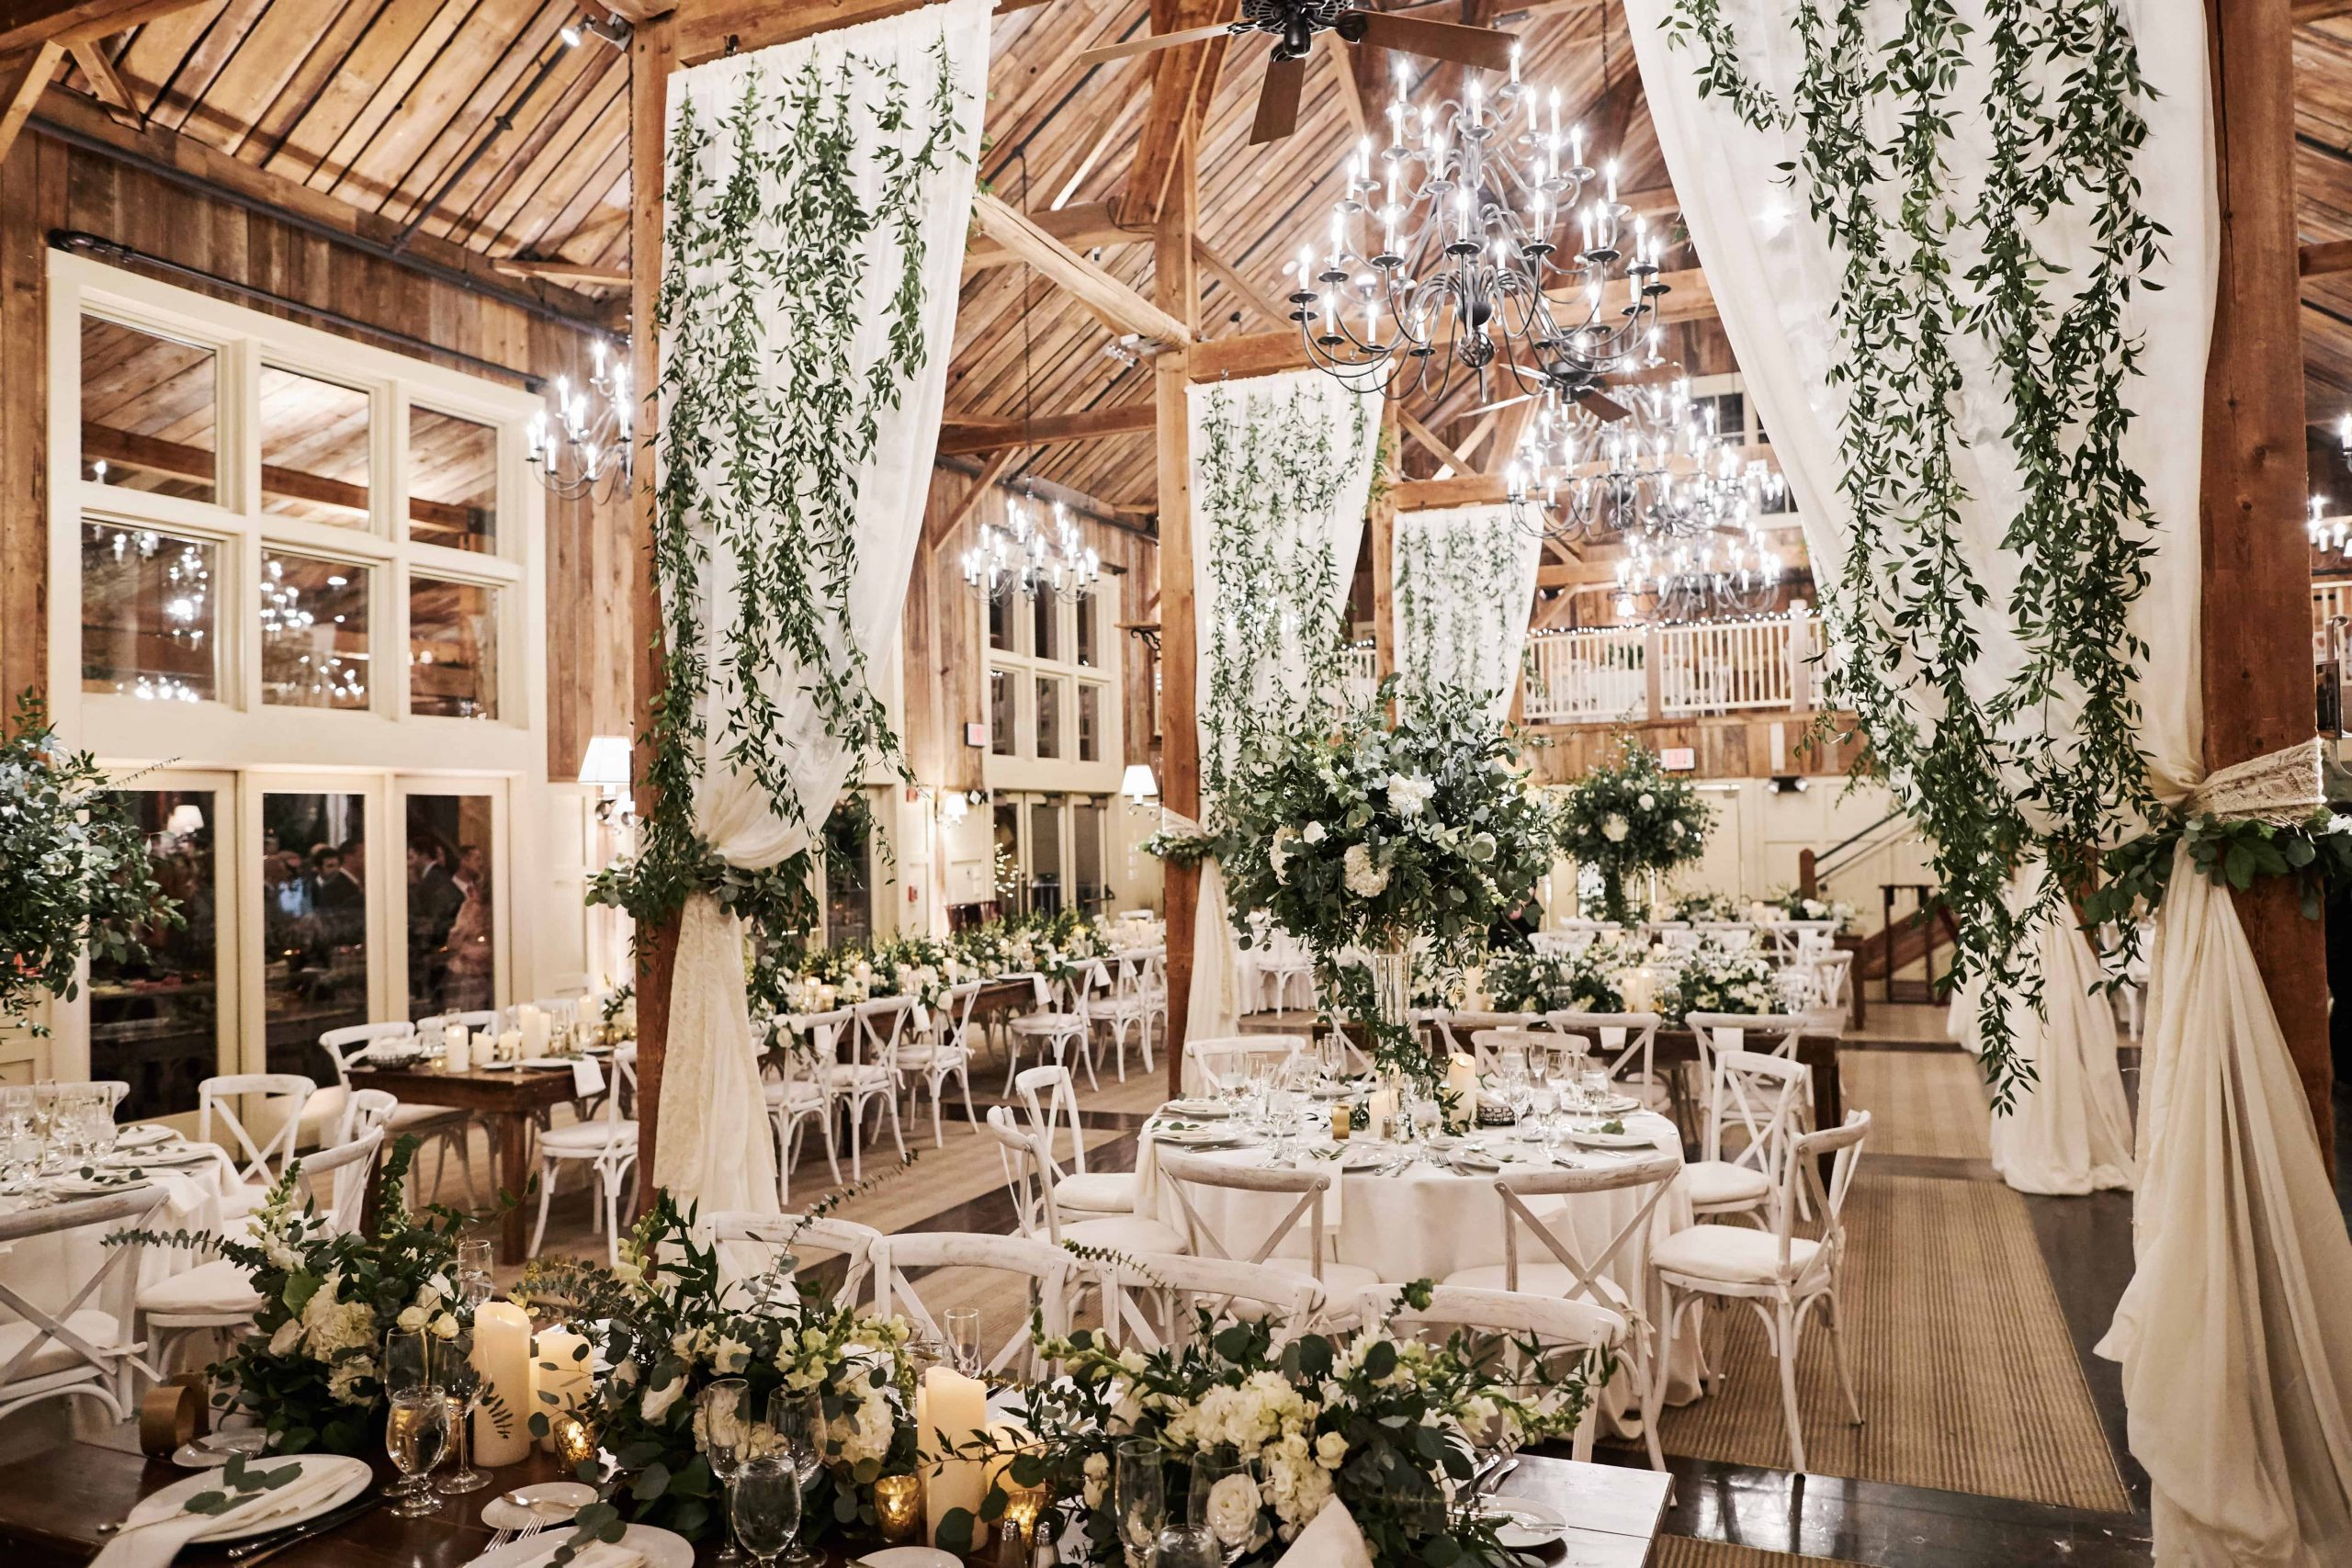 https://www.myflouer.com/wp-content/uploads/2020/09/Rustic-Elegance-Wedding-Design-scaled.jpg